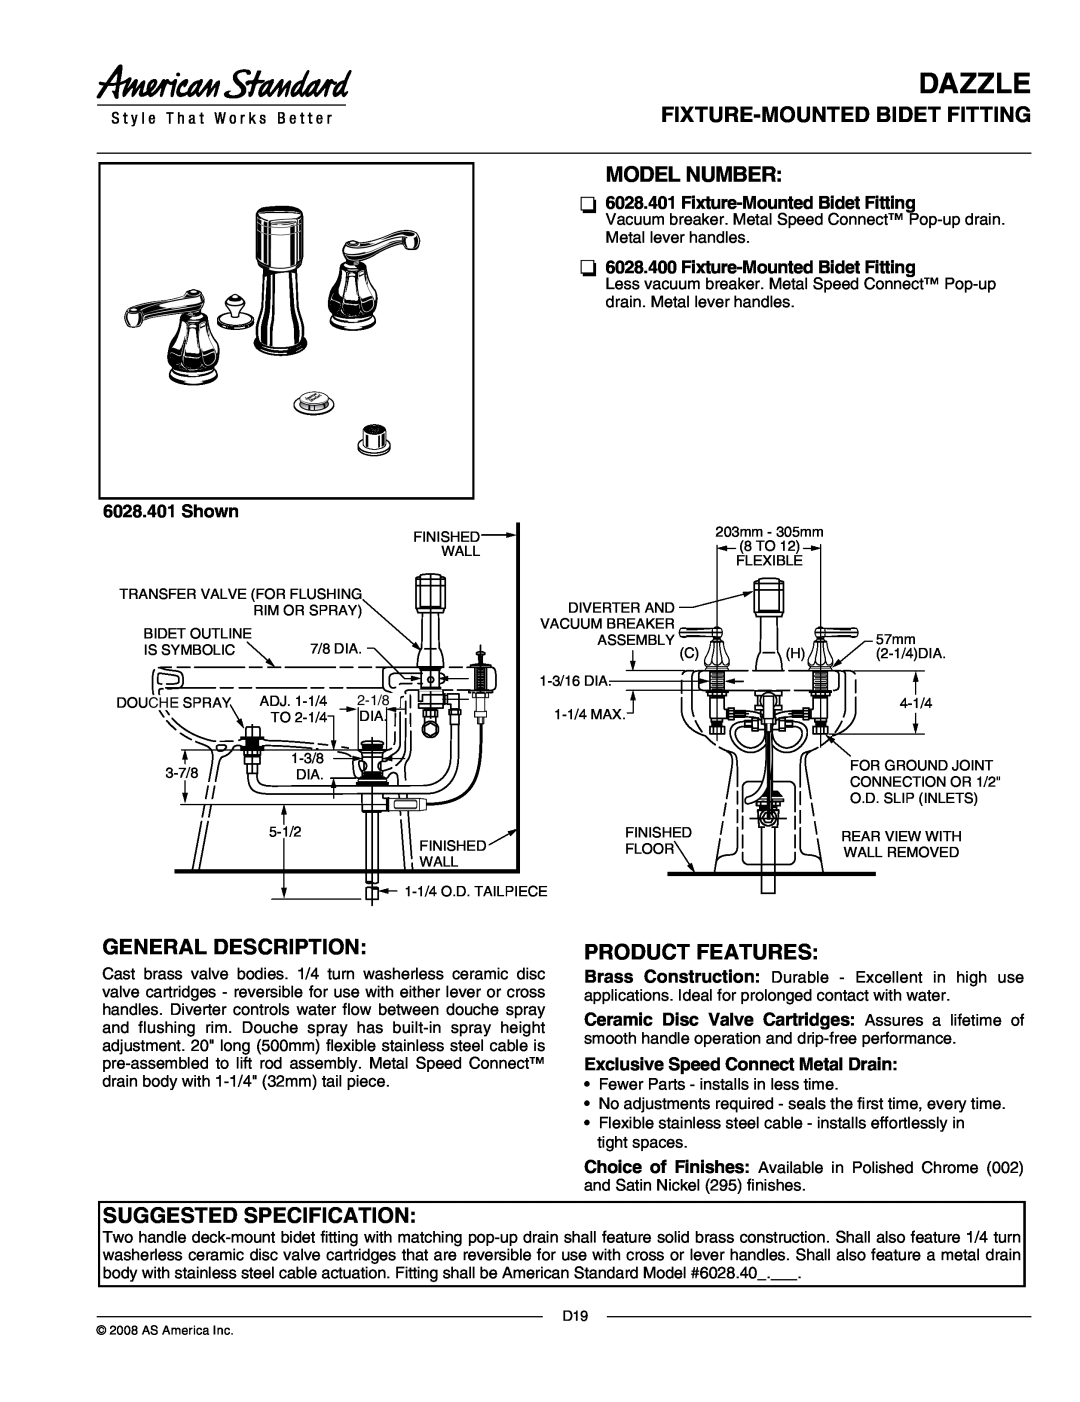 American Standard 6028.400 manual Dazzle, Fixture-Mountedbidet Fitting Model Number, General Description, Product Features 